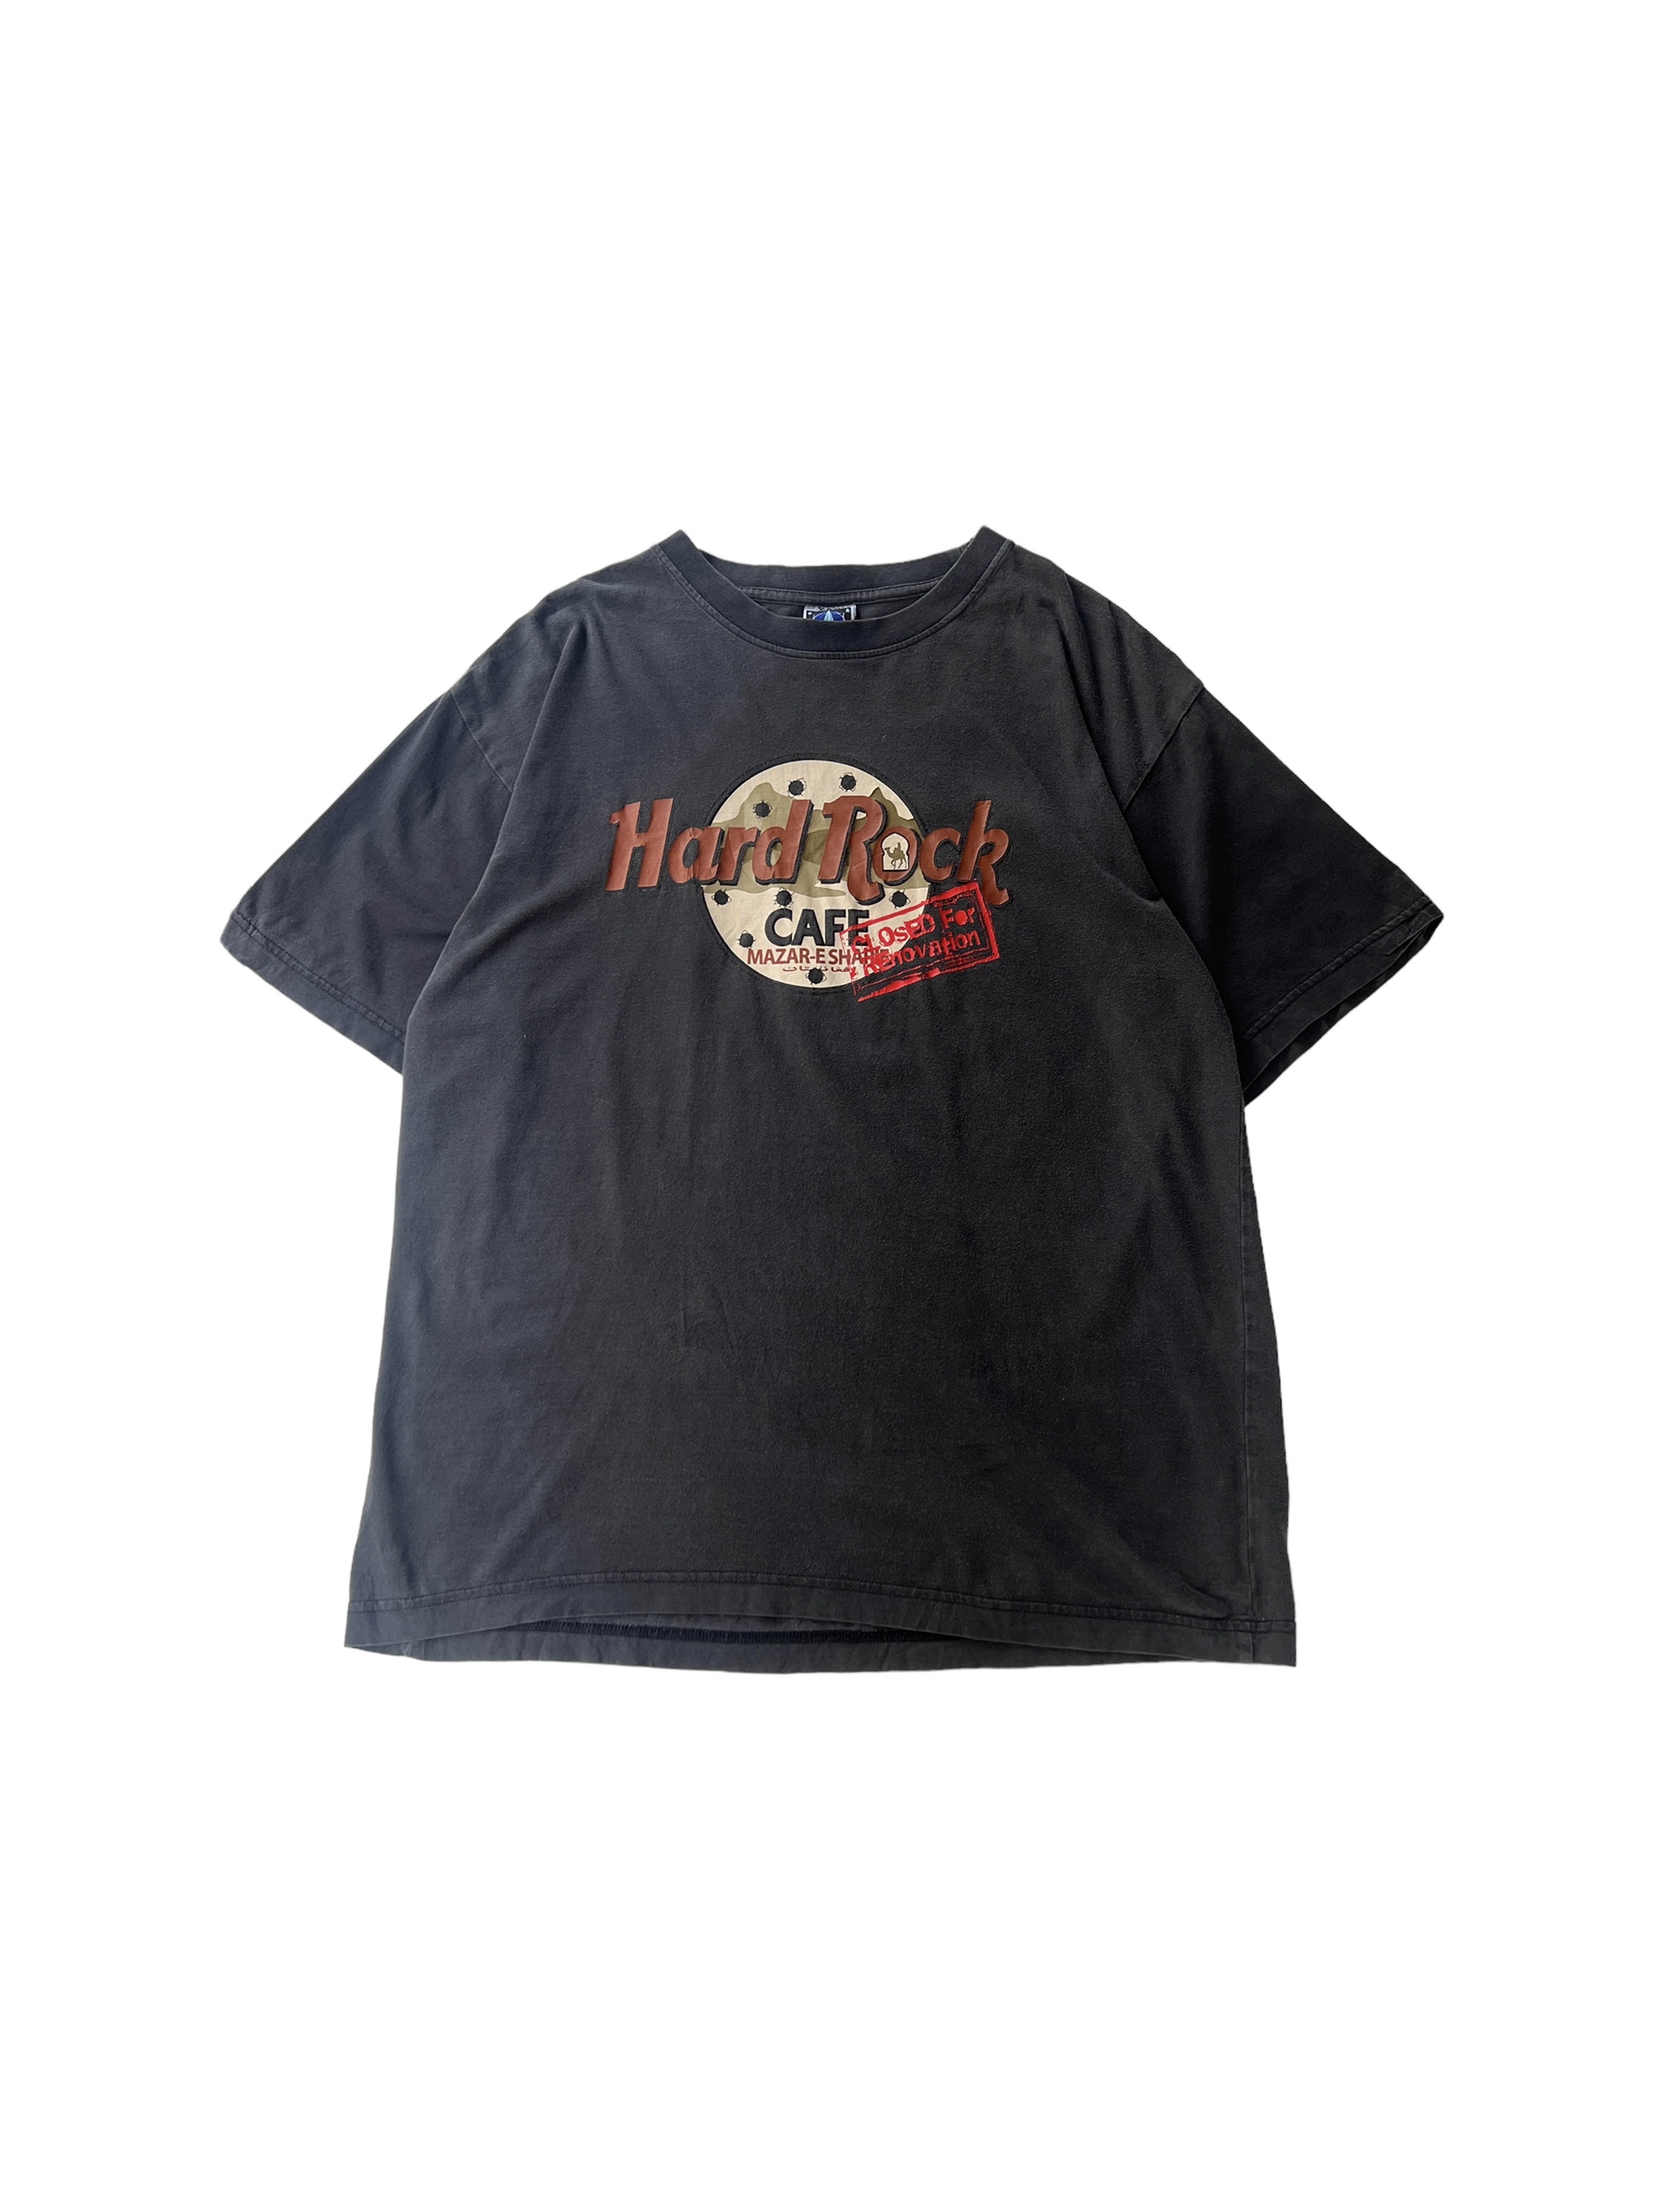 HARD ROCK CAFE t-shirts